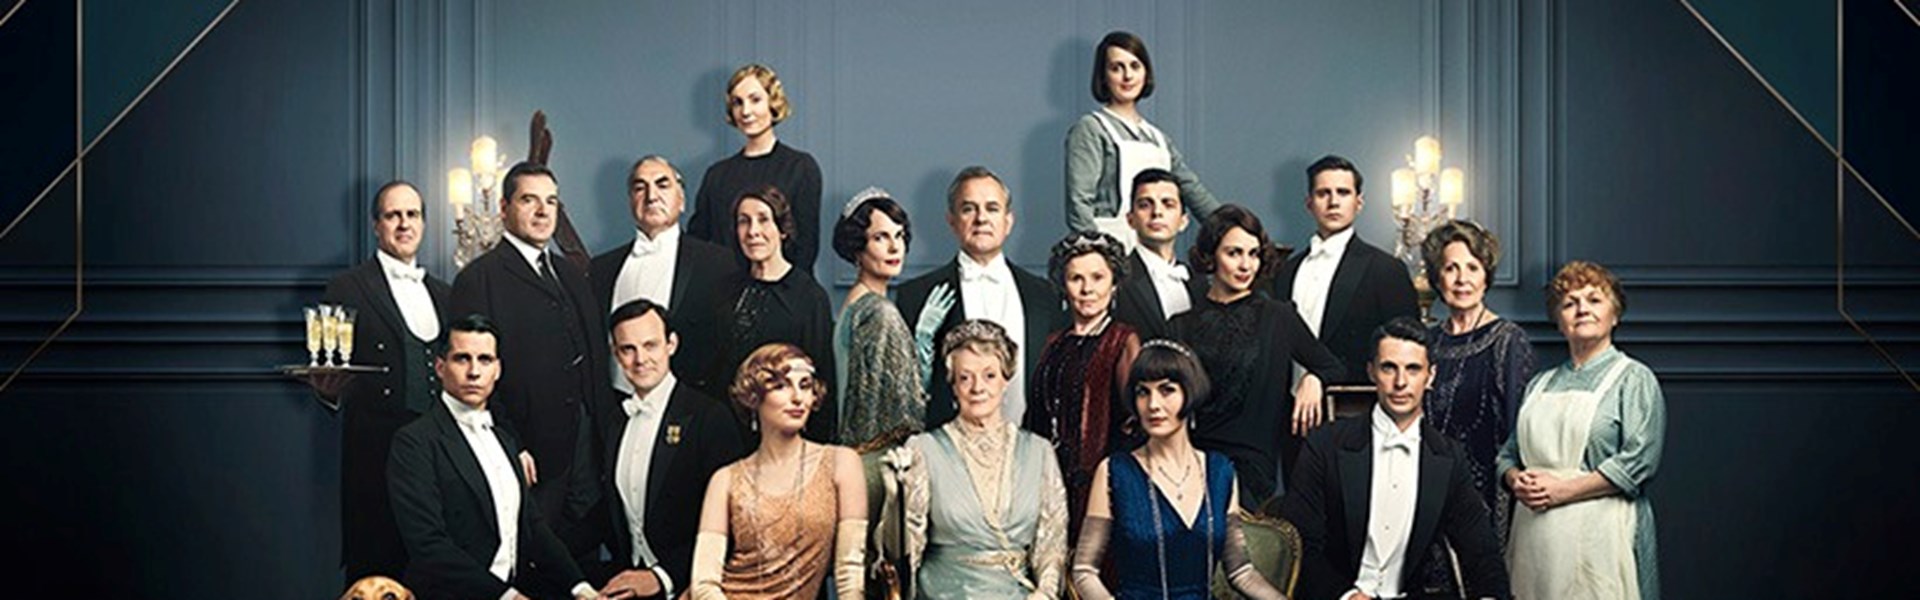 FILM: Downton Abbey 